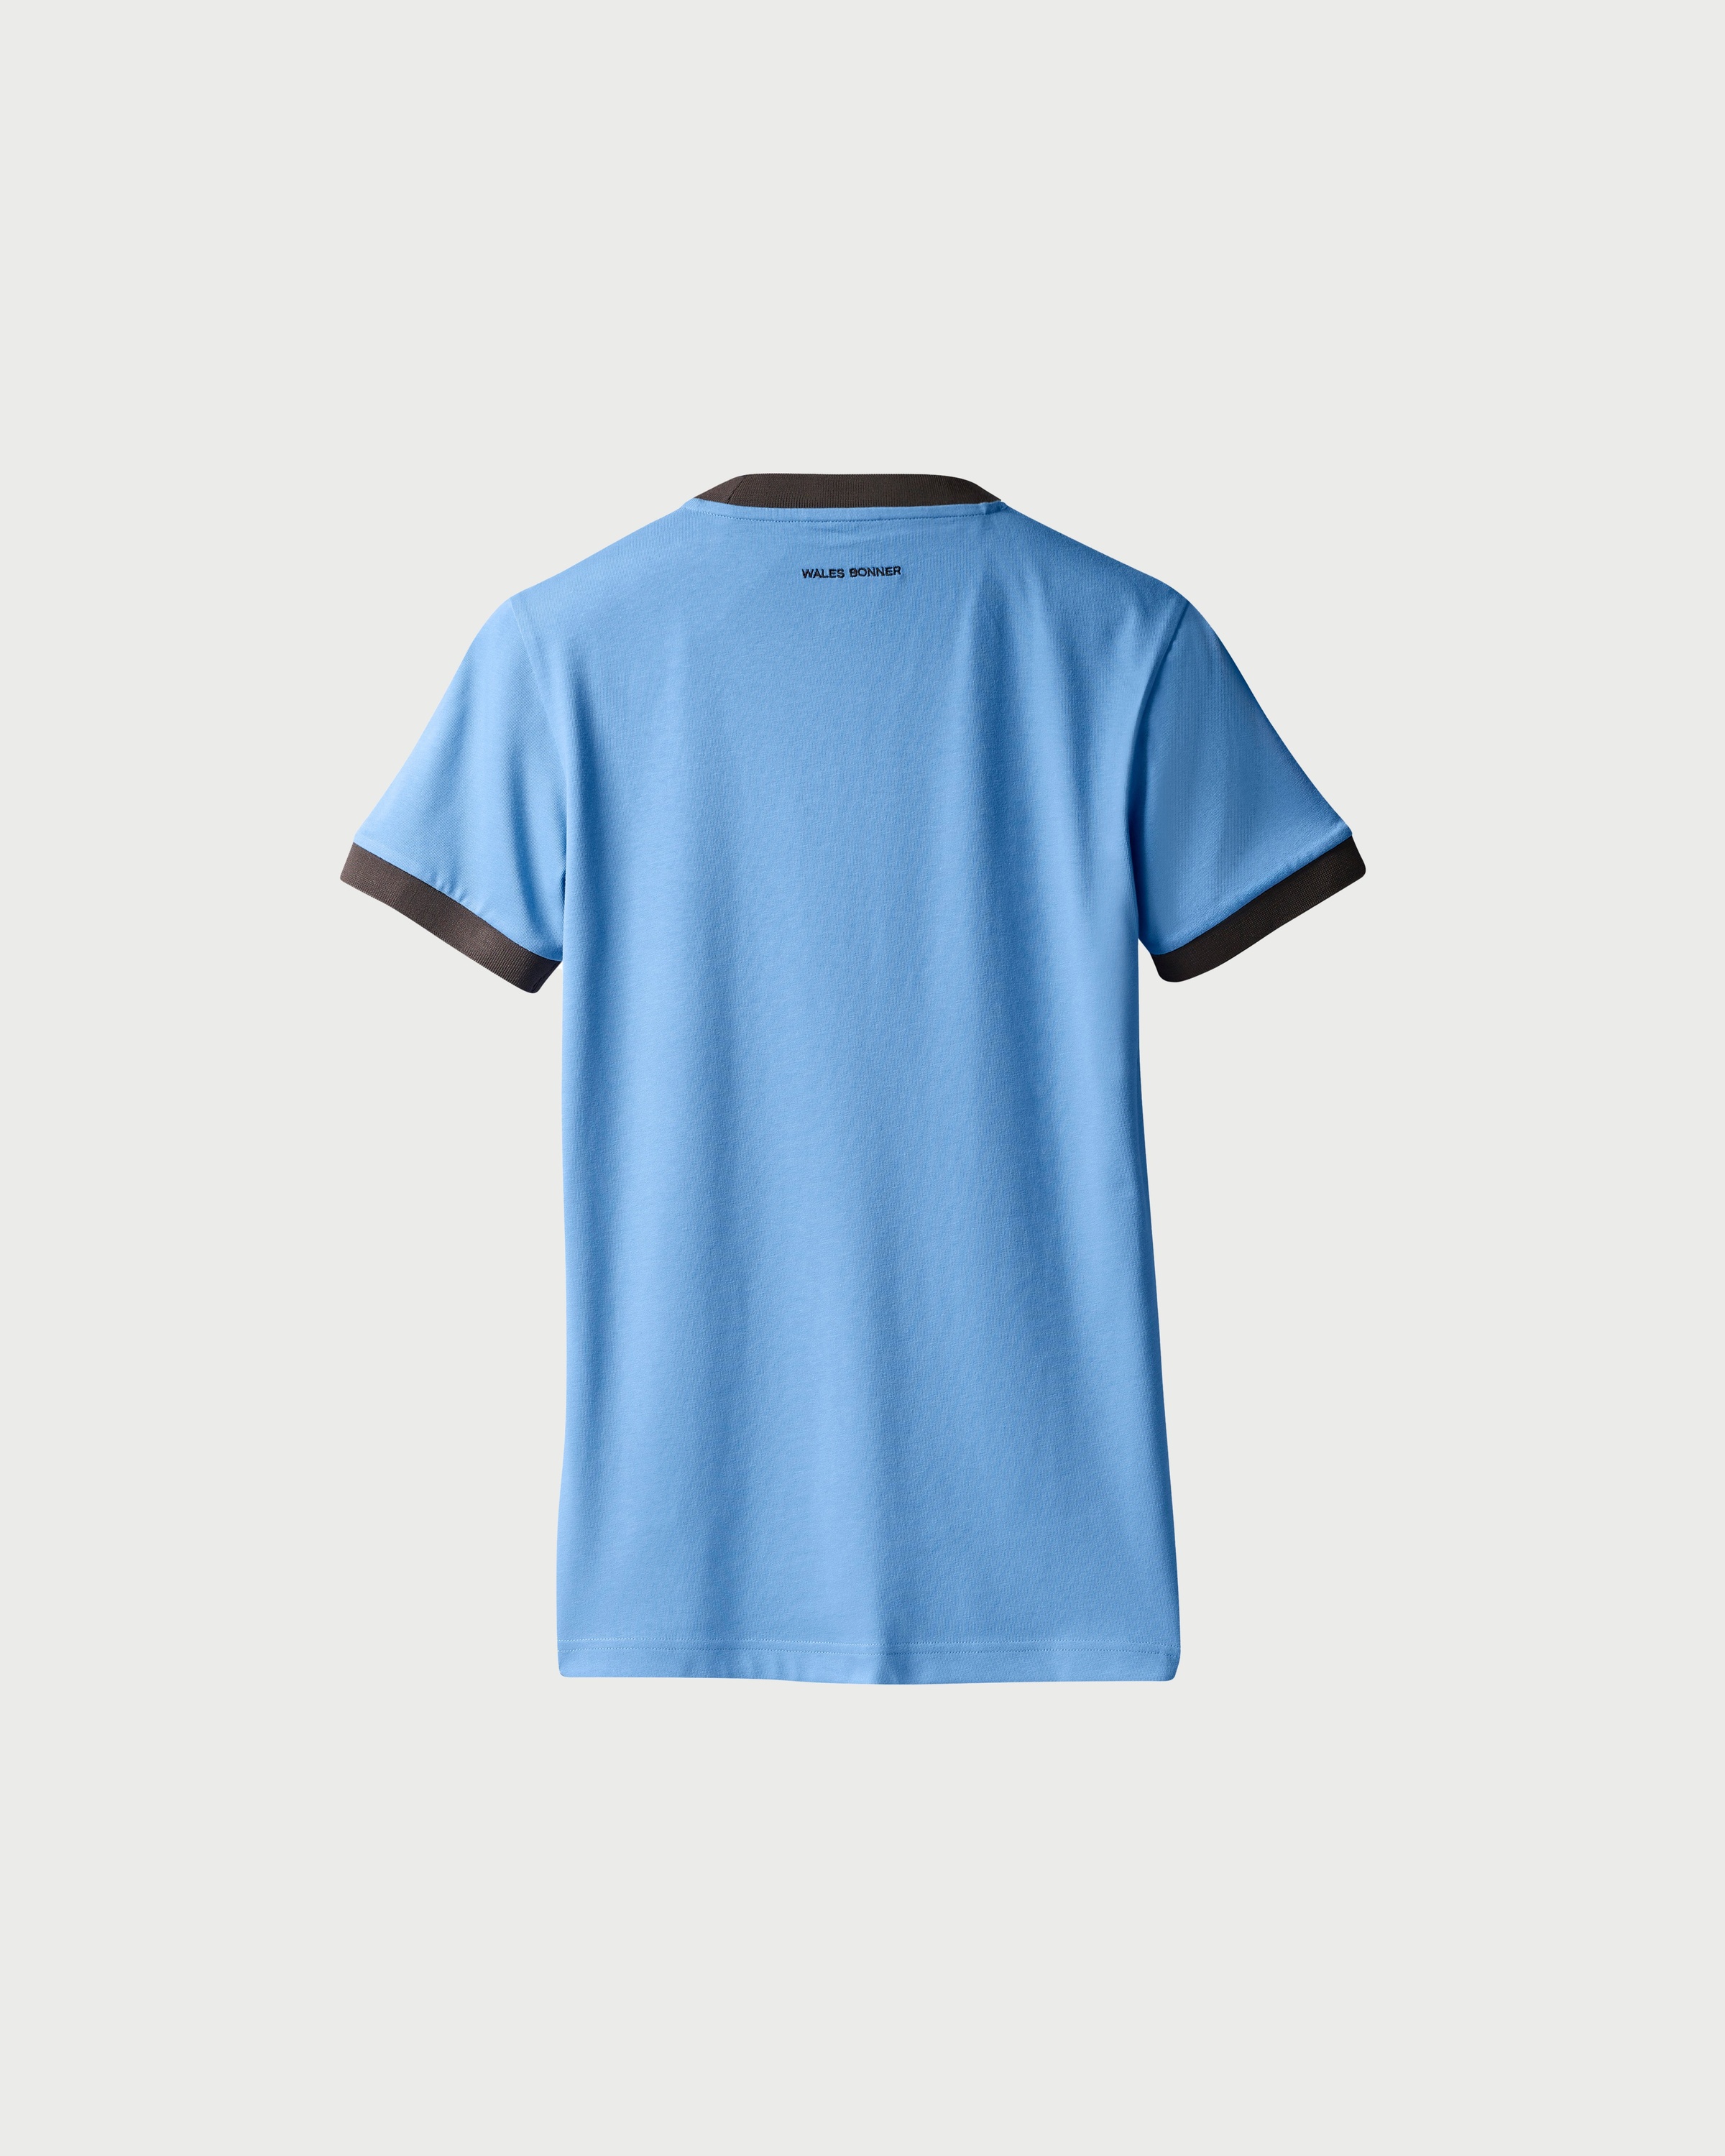 Adidas x Wales Bonner – Tee Light Blue - T-Shirts - Blue - Image 2